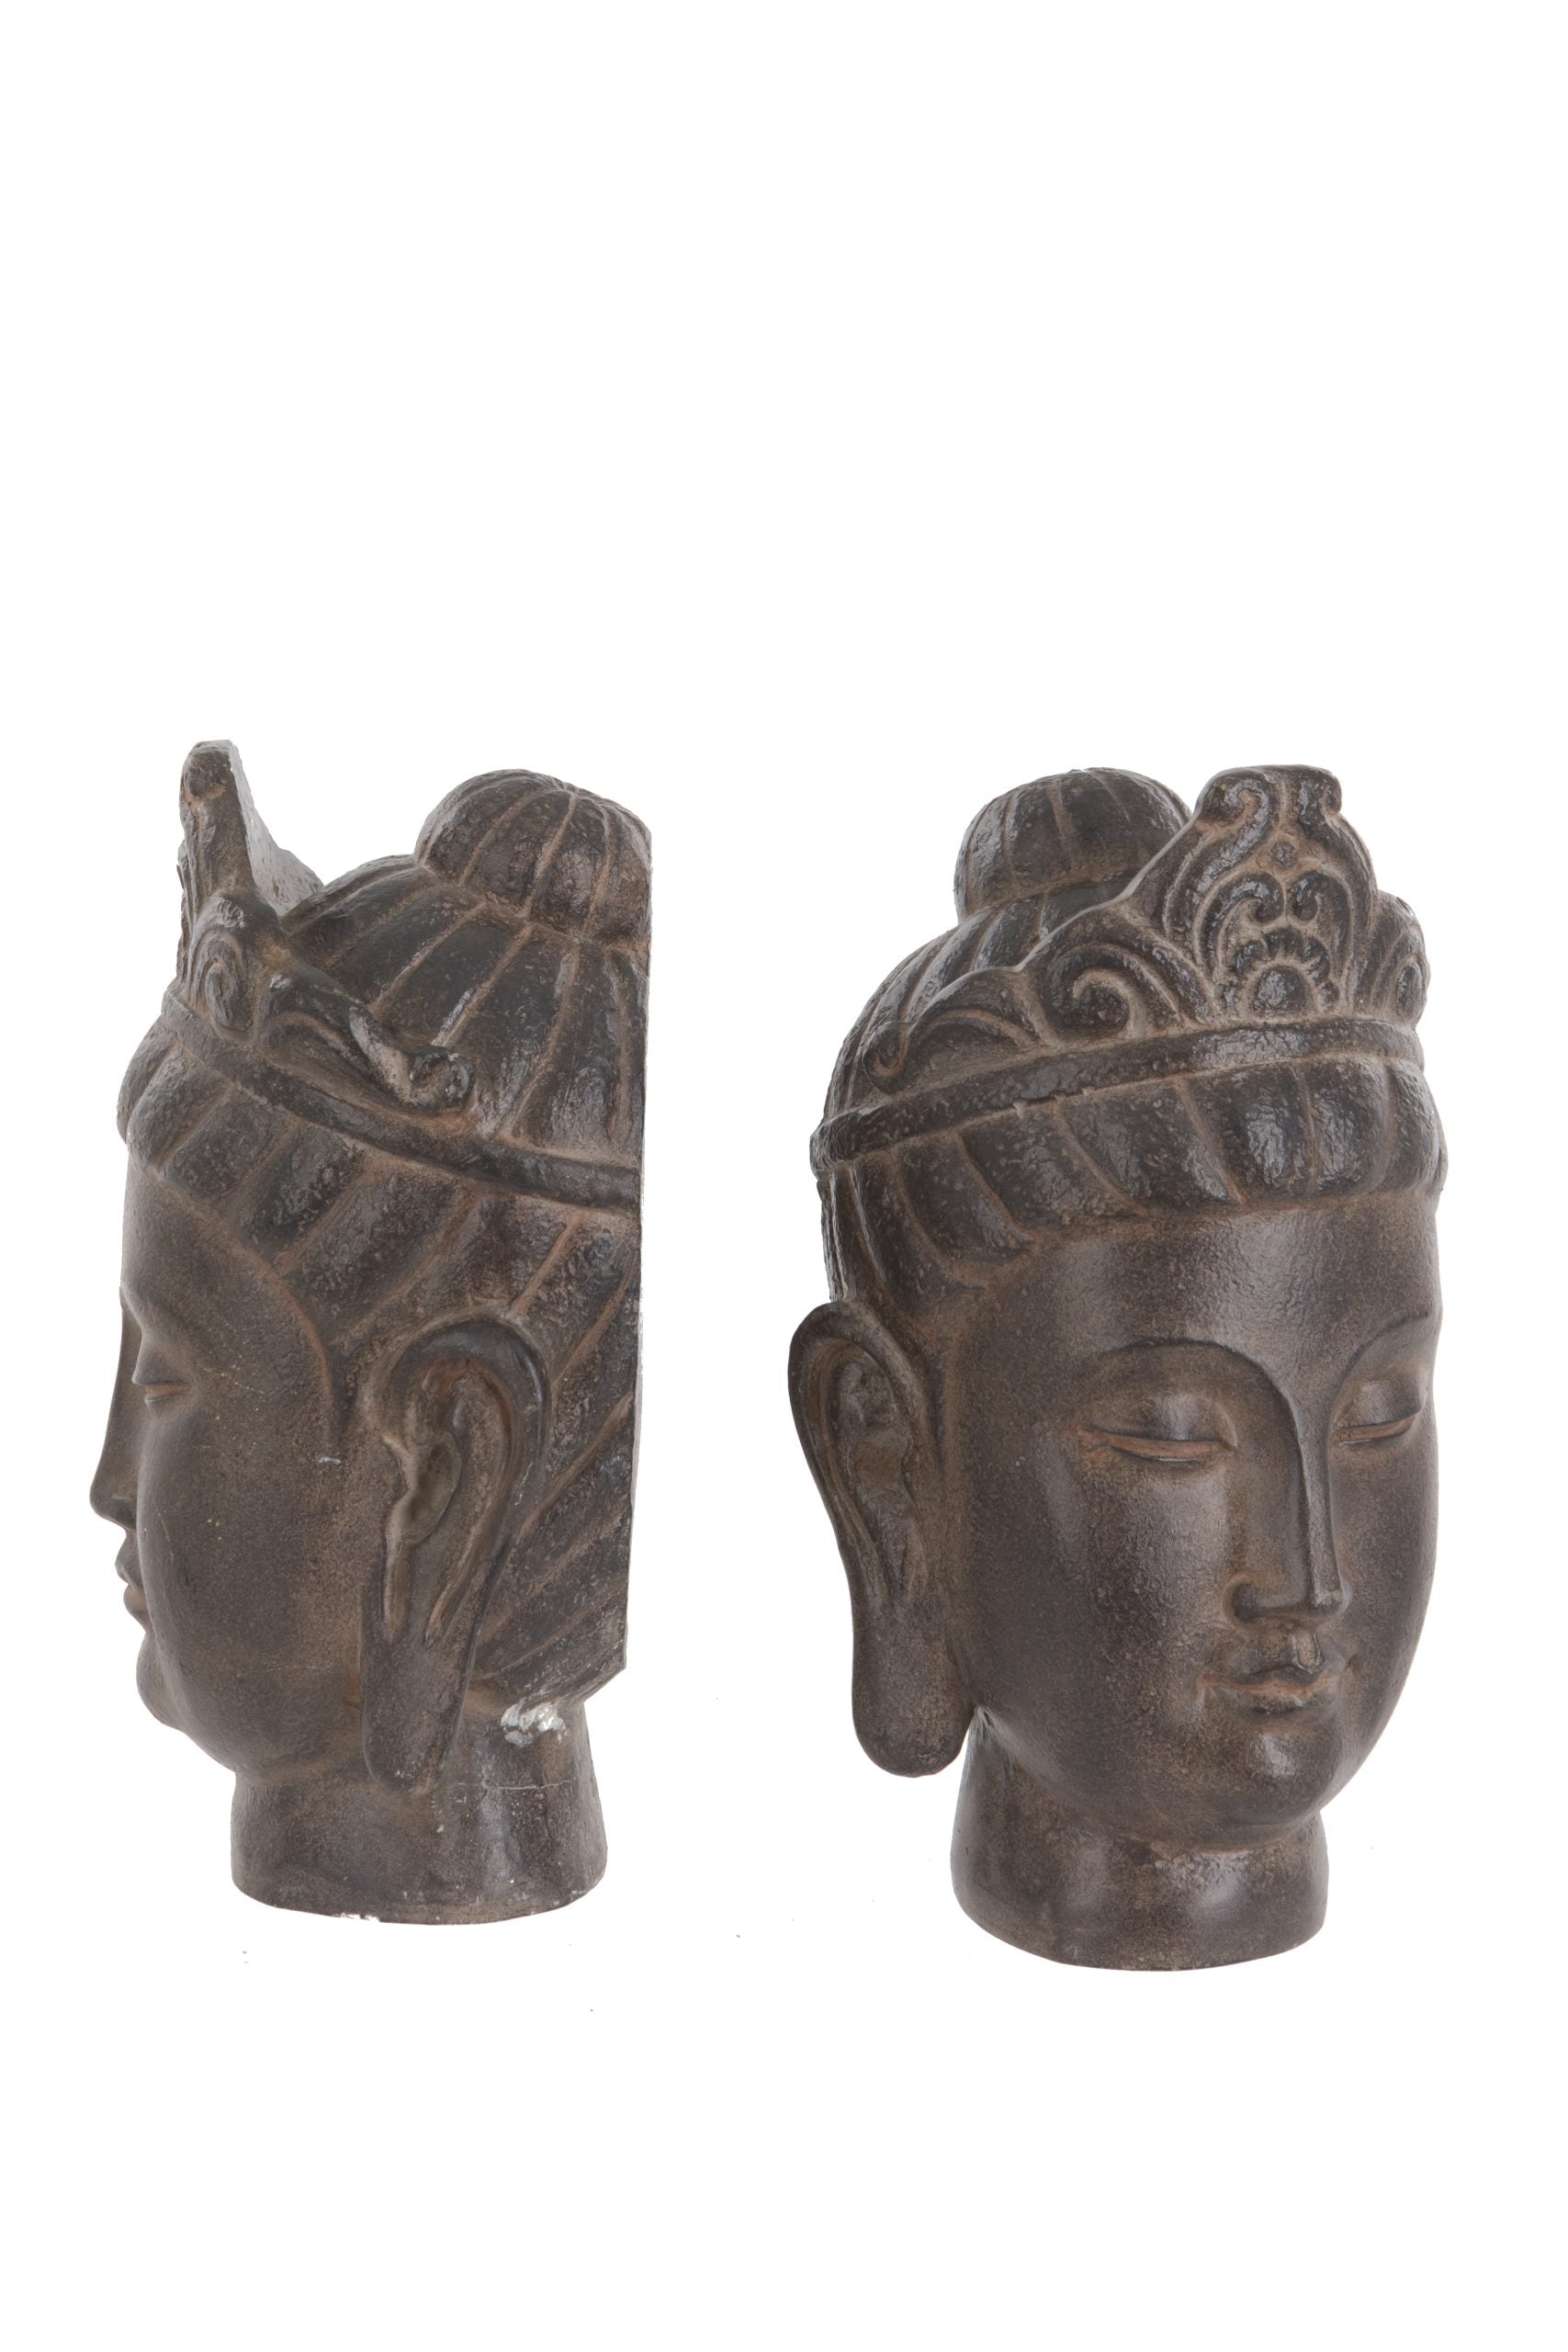 London Ornaments Buddha Bookends